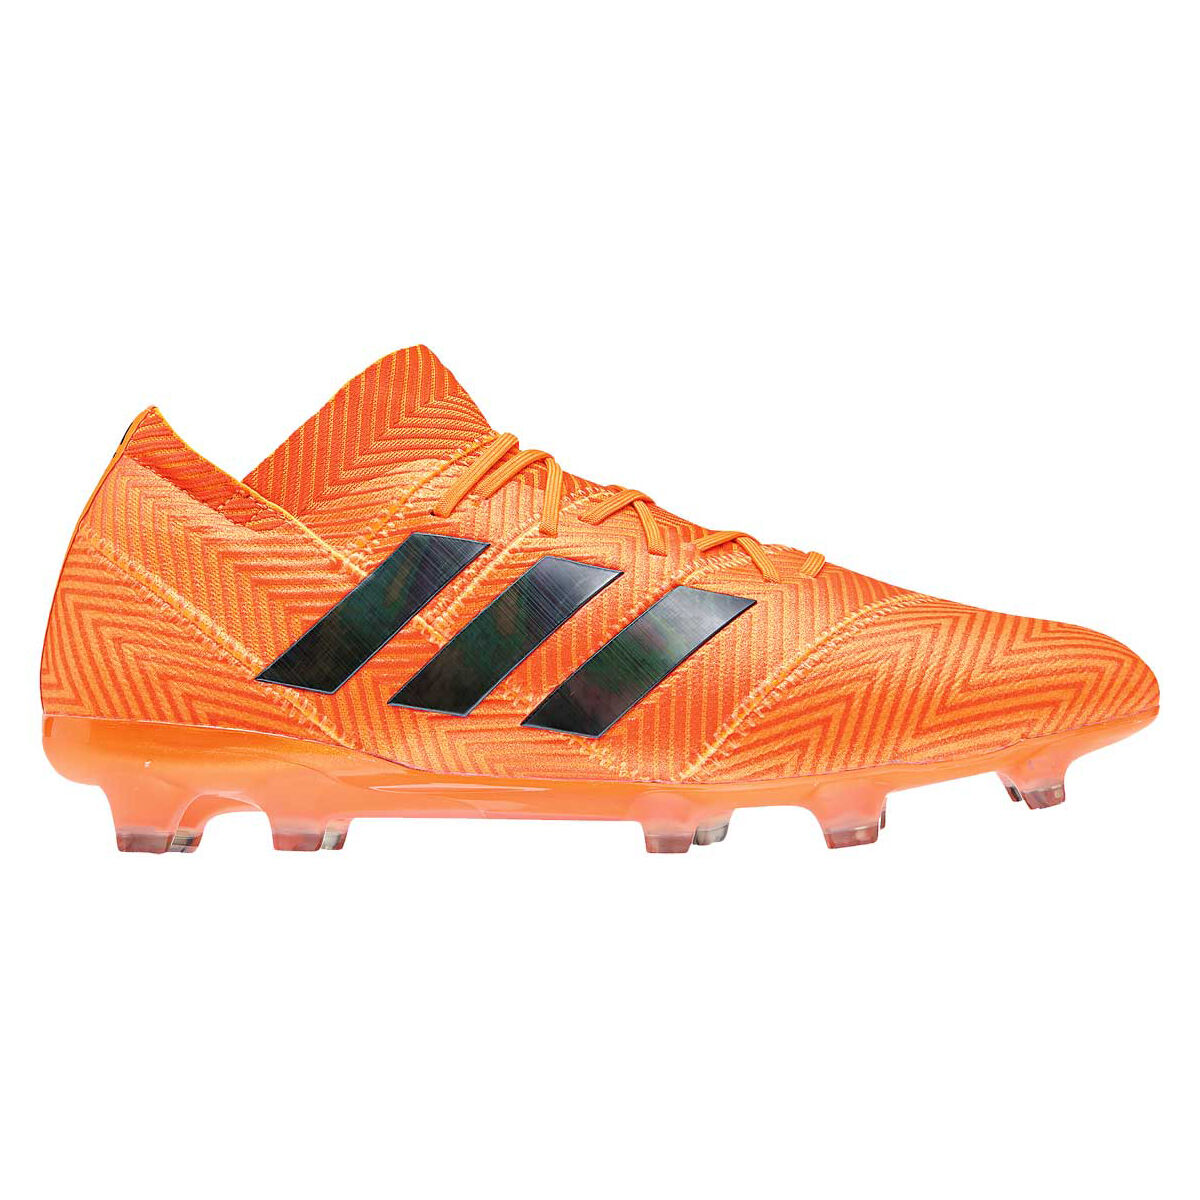 adidas boots orange